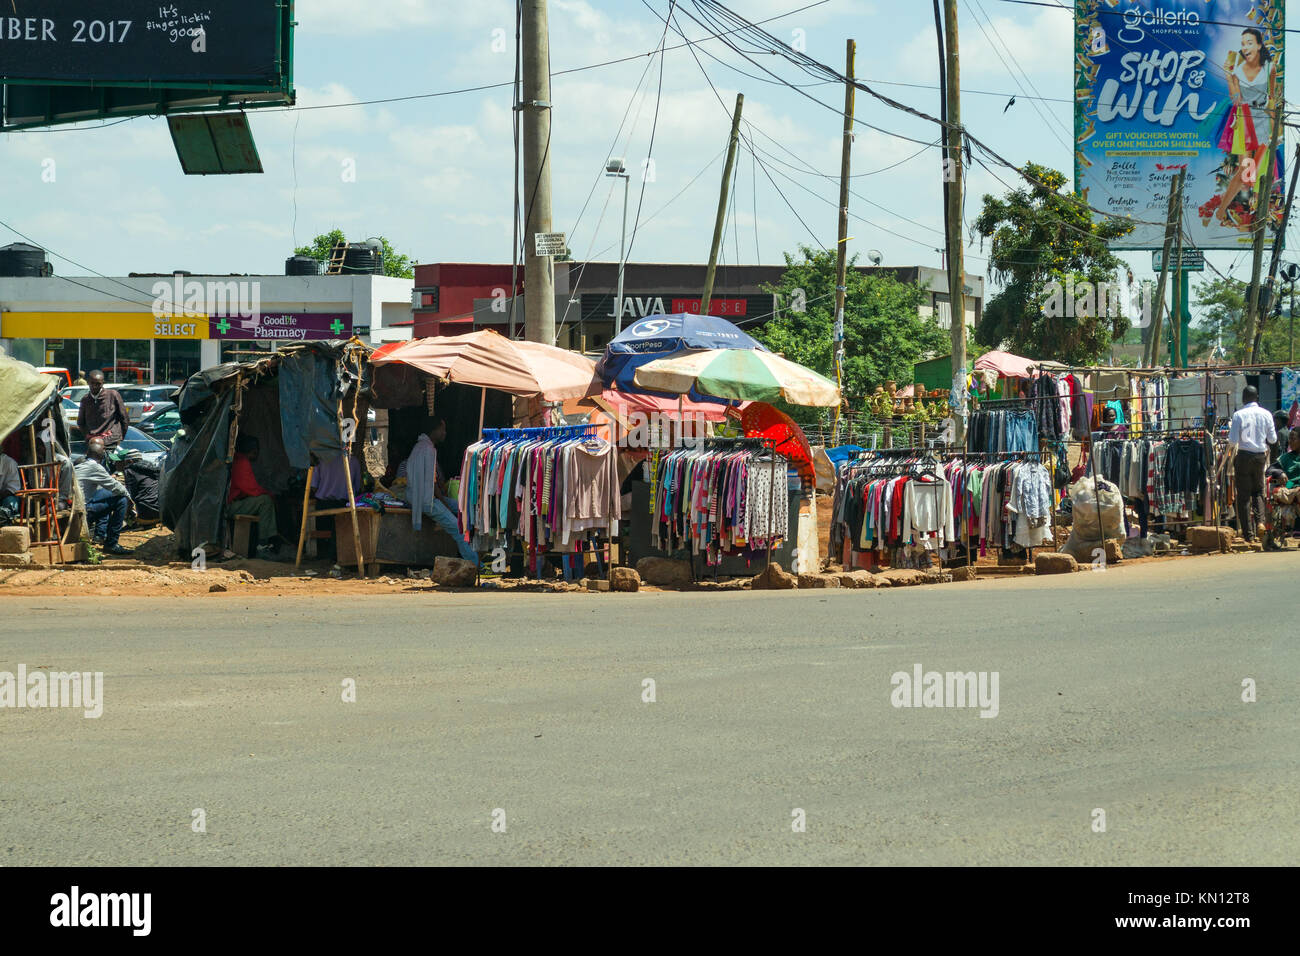 Roadside stalls selling clothes on display, Nairobi, Kenya, East Africa Stock Photo